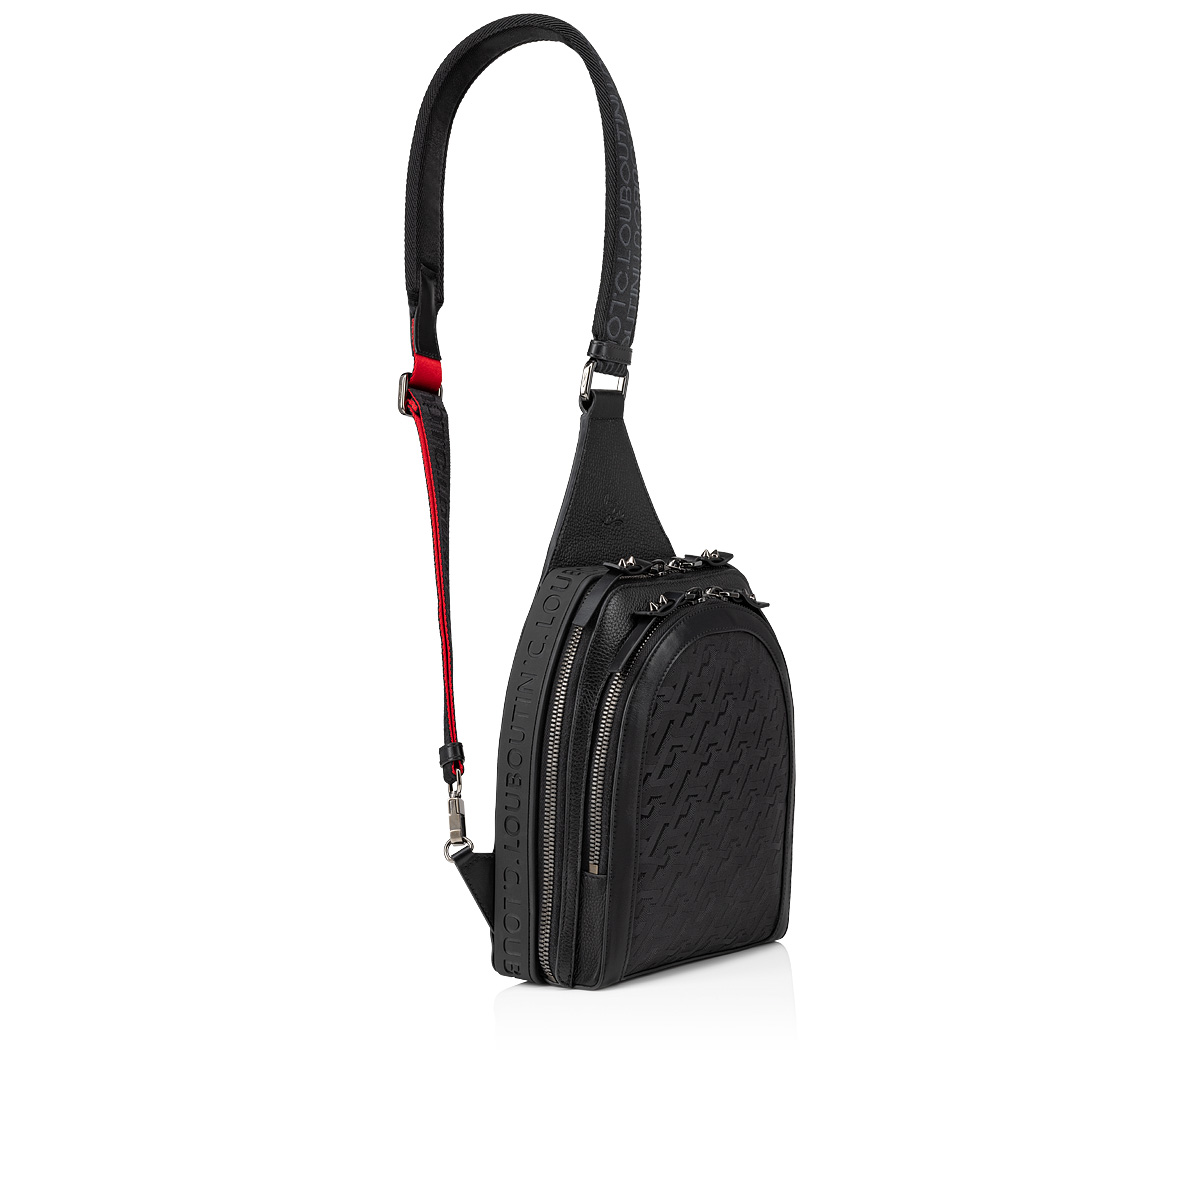 Cross body bags Christian Louboutin - Shoulder bag in black with logo  detail - 3205123CM53